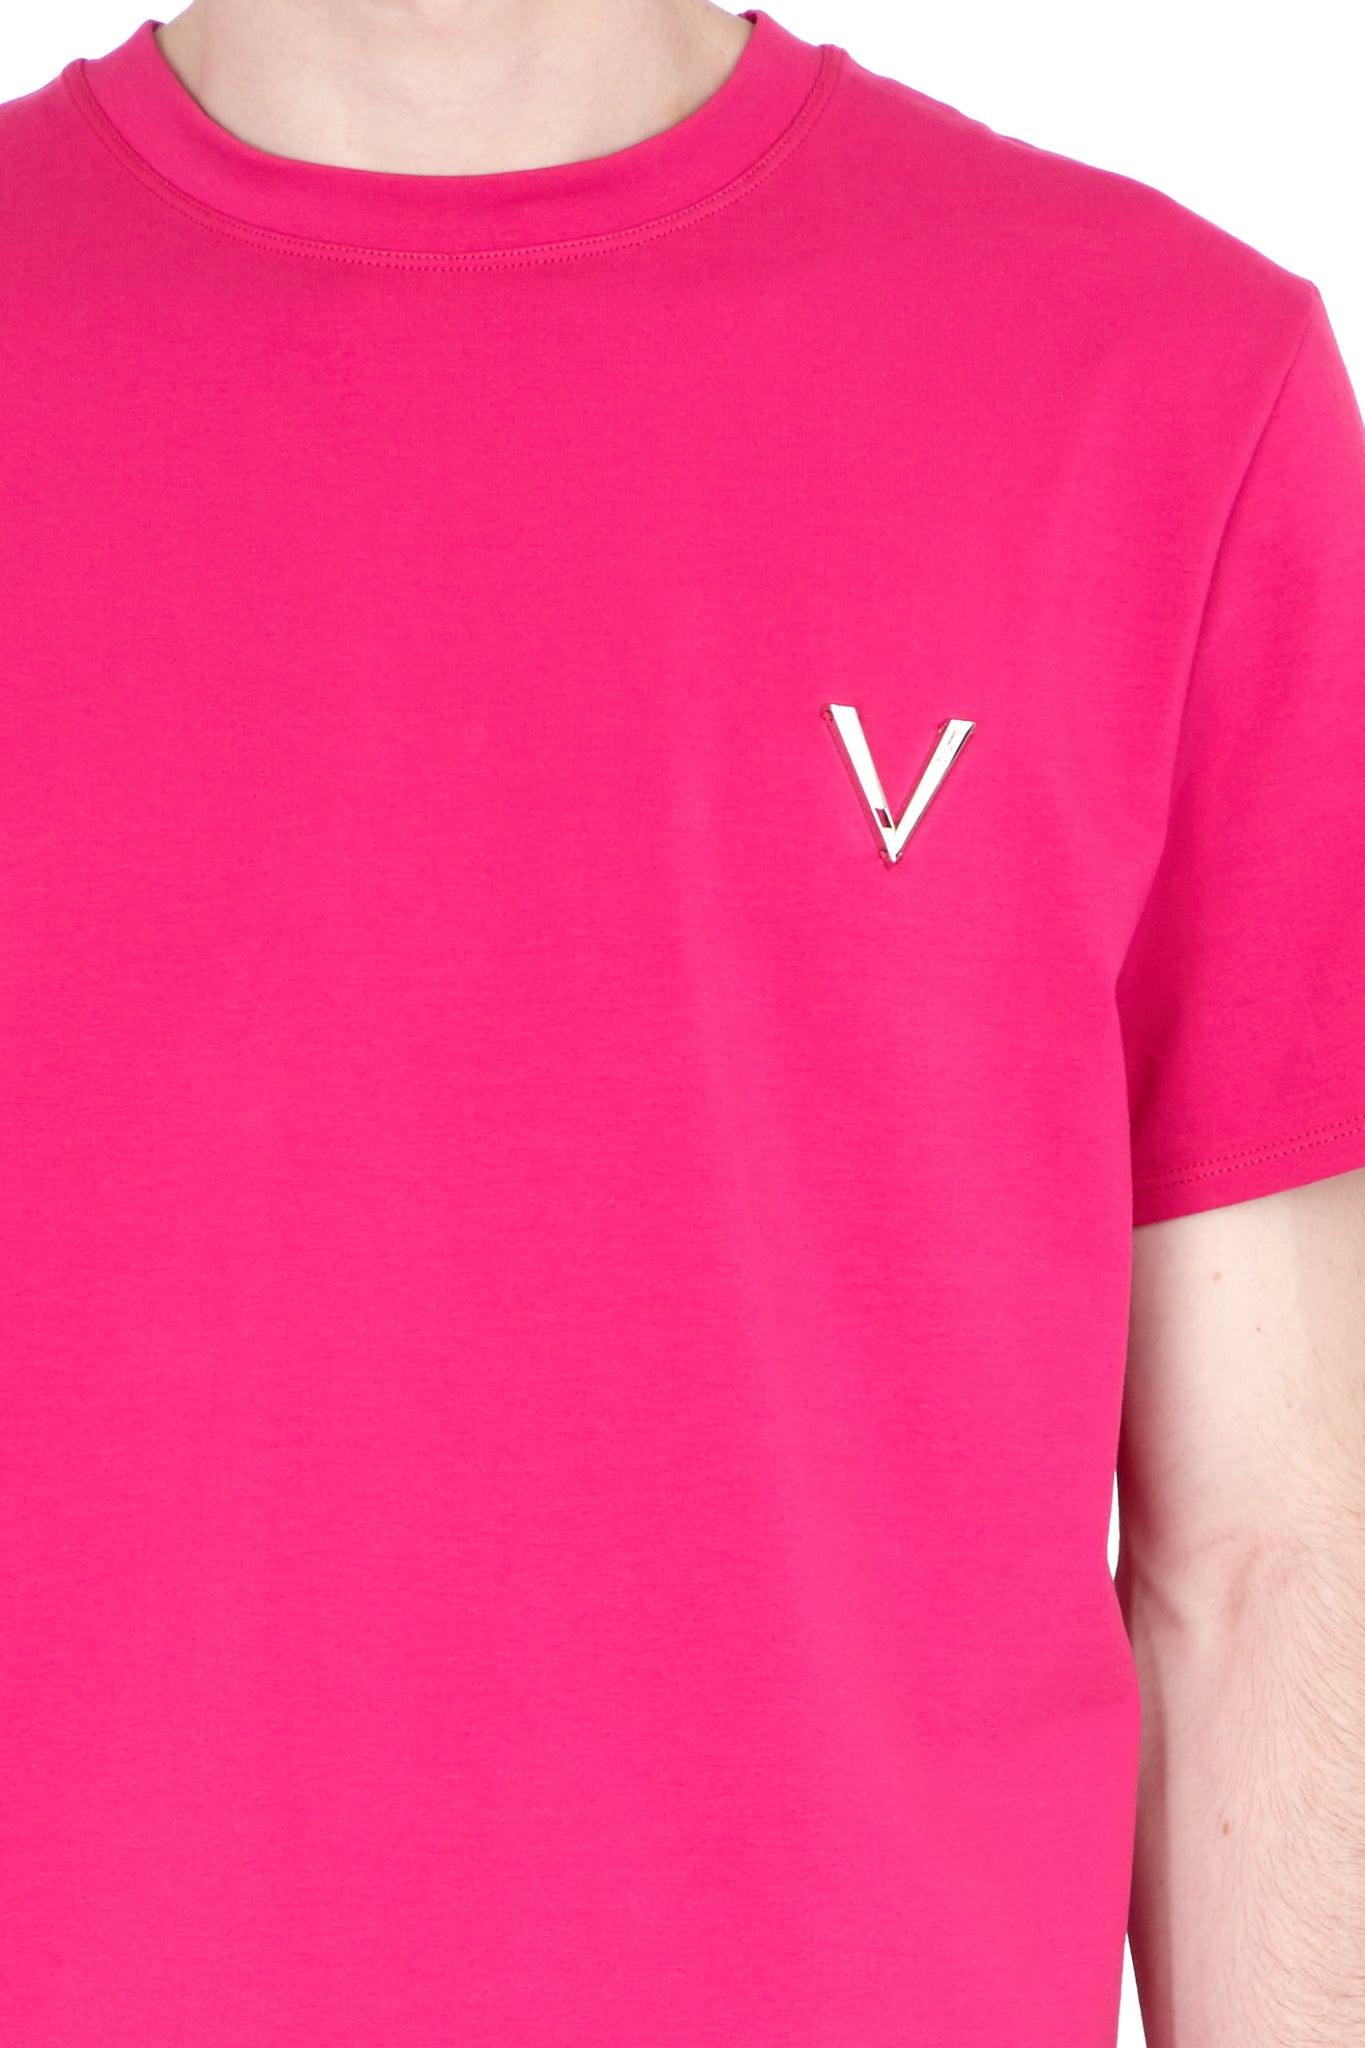 VALETTE STUDIO  Le T-shirt "V" 